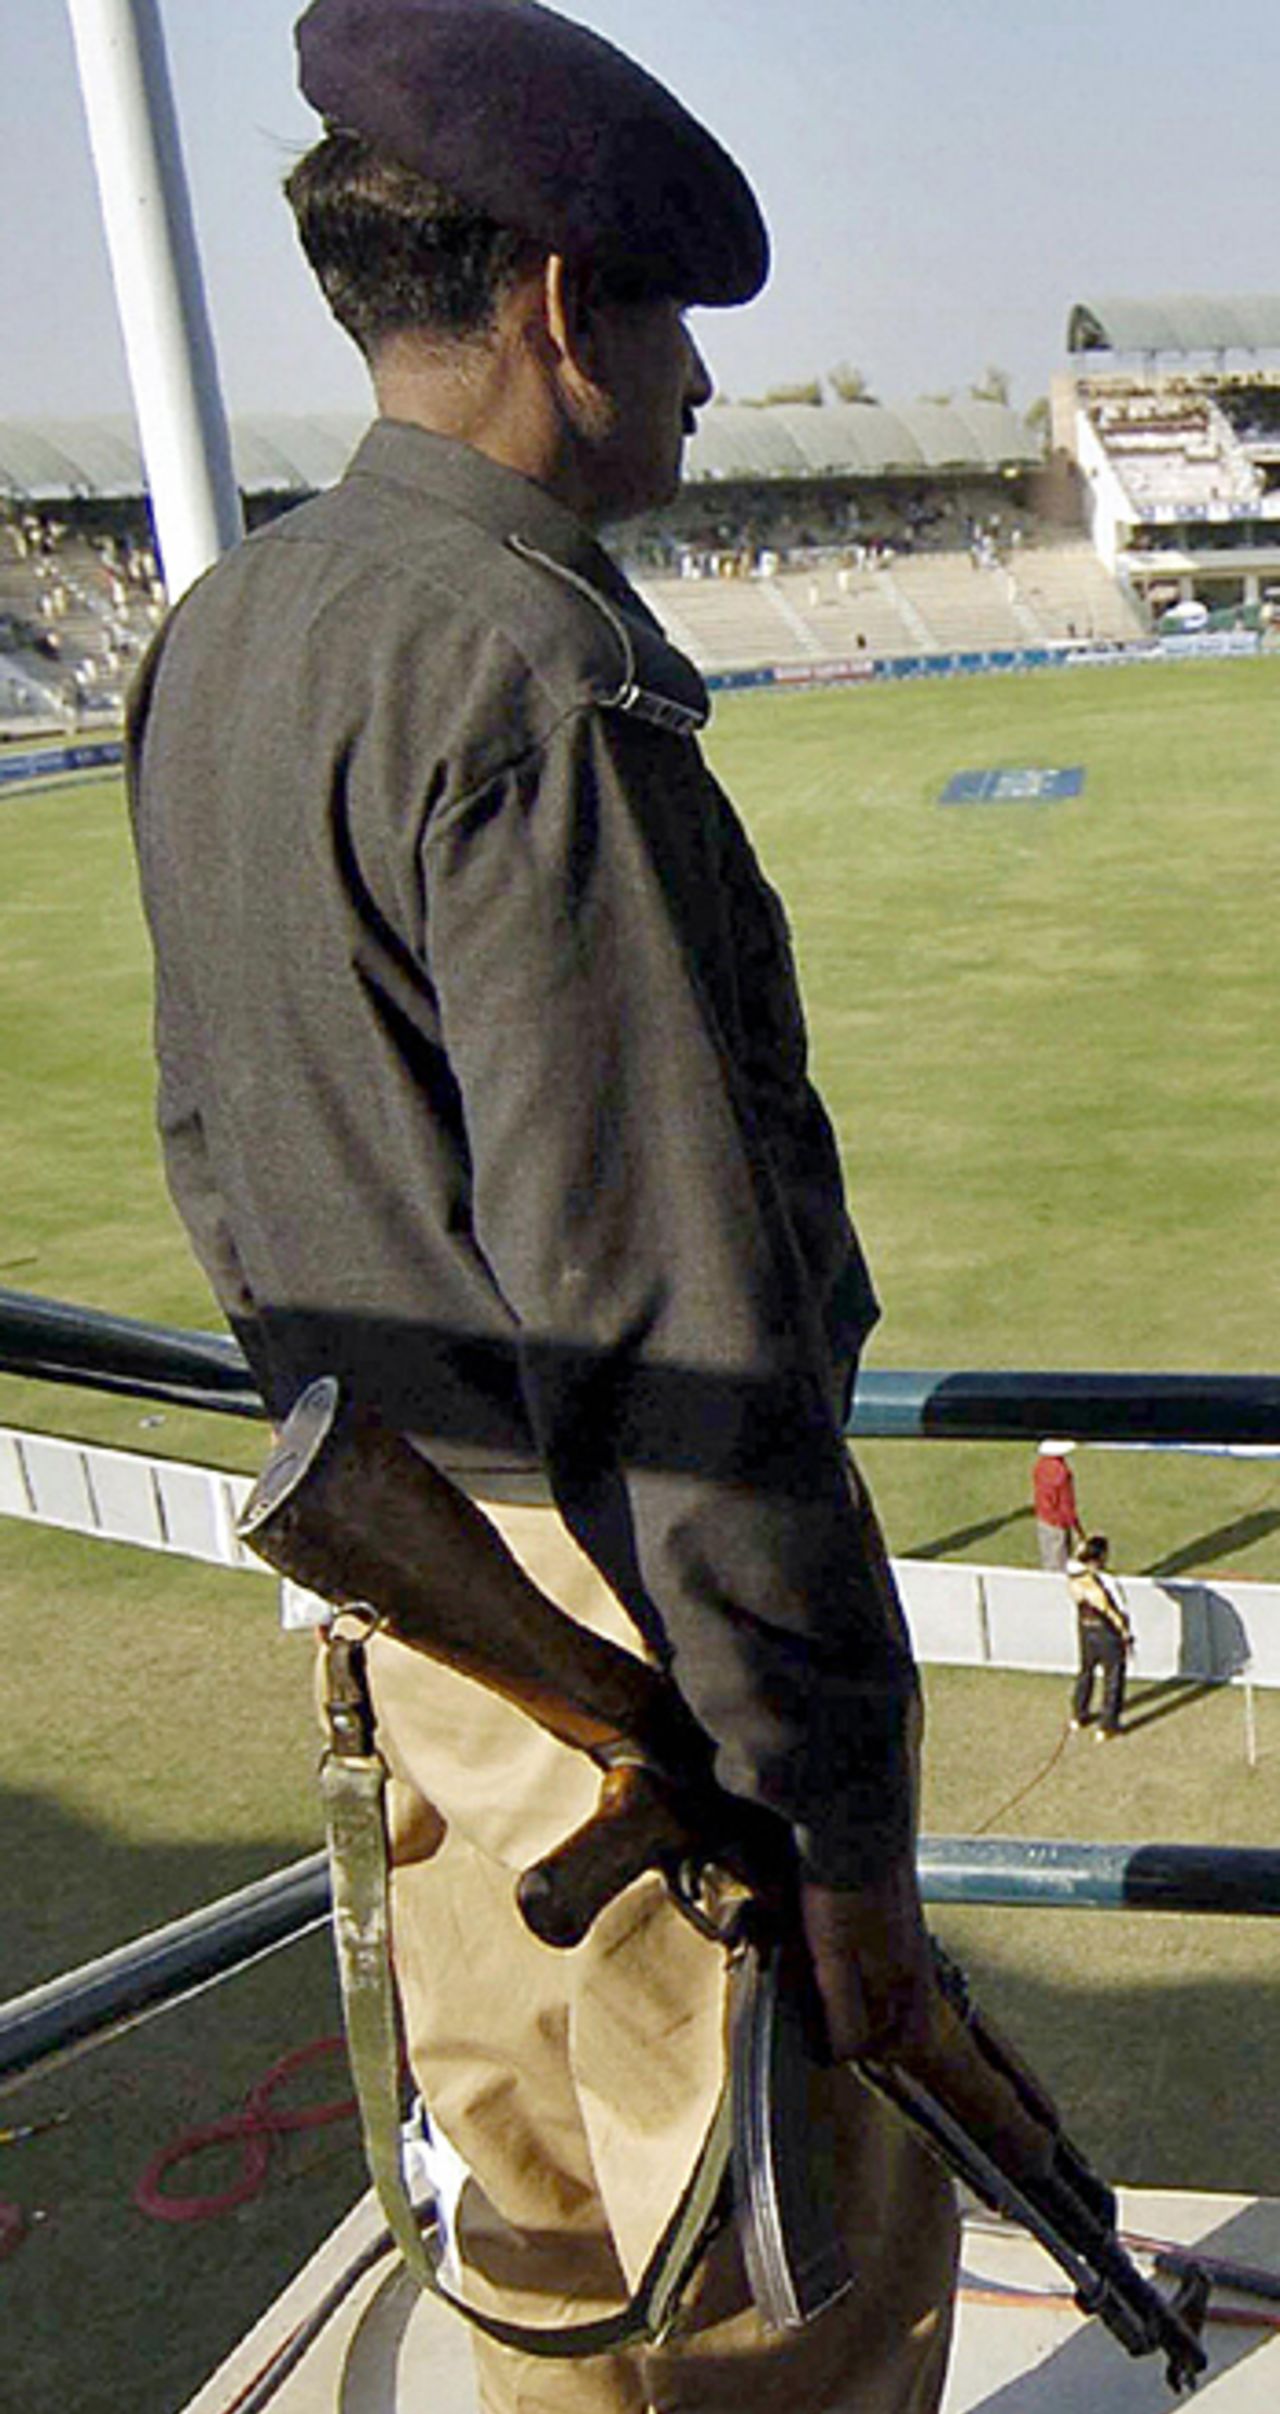 A Pakistani policeman stands guard as England practise, Multan, November 17, 2005